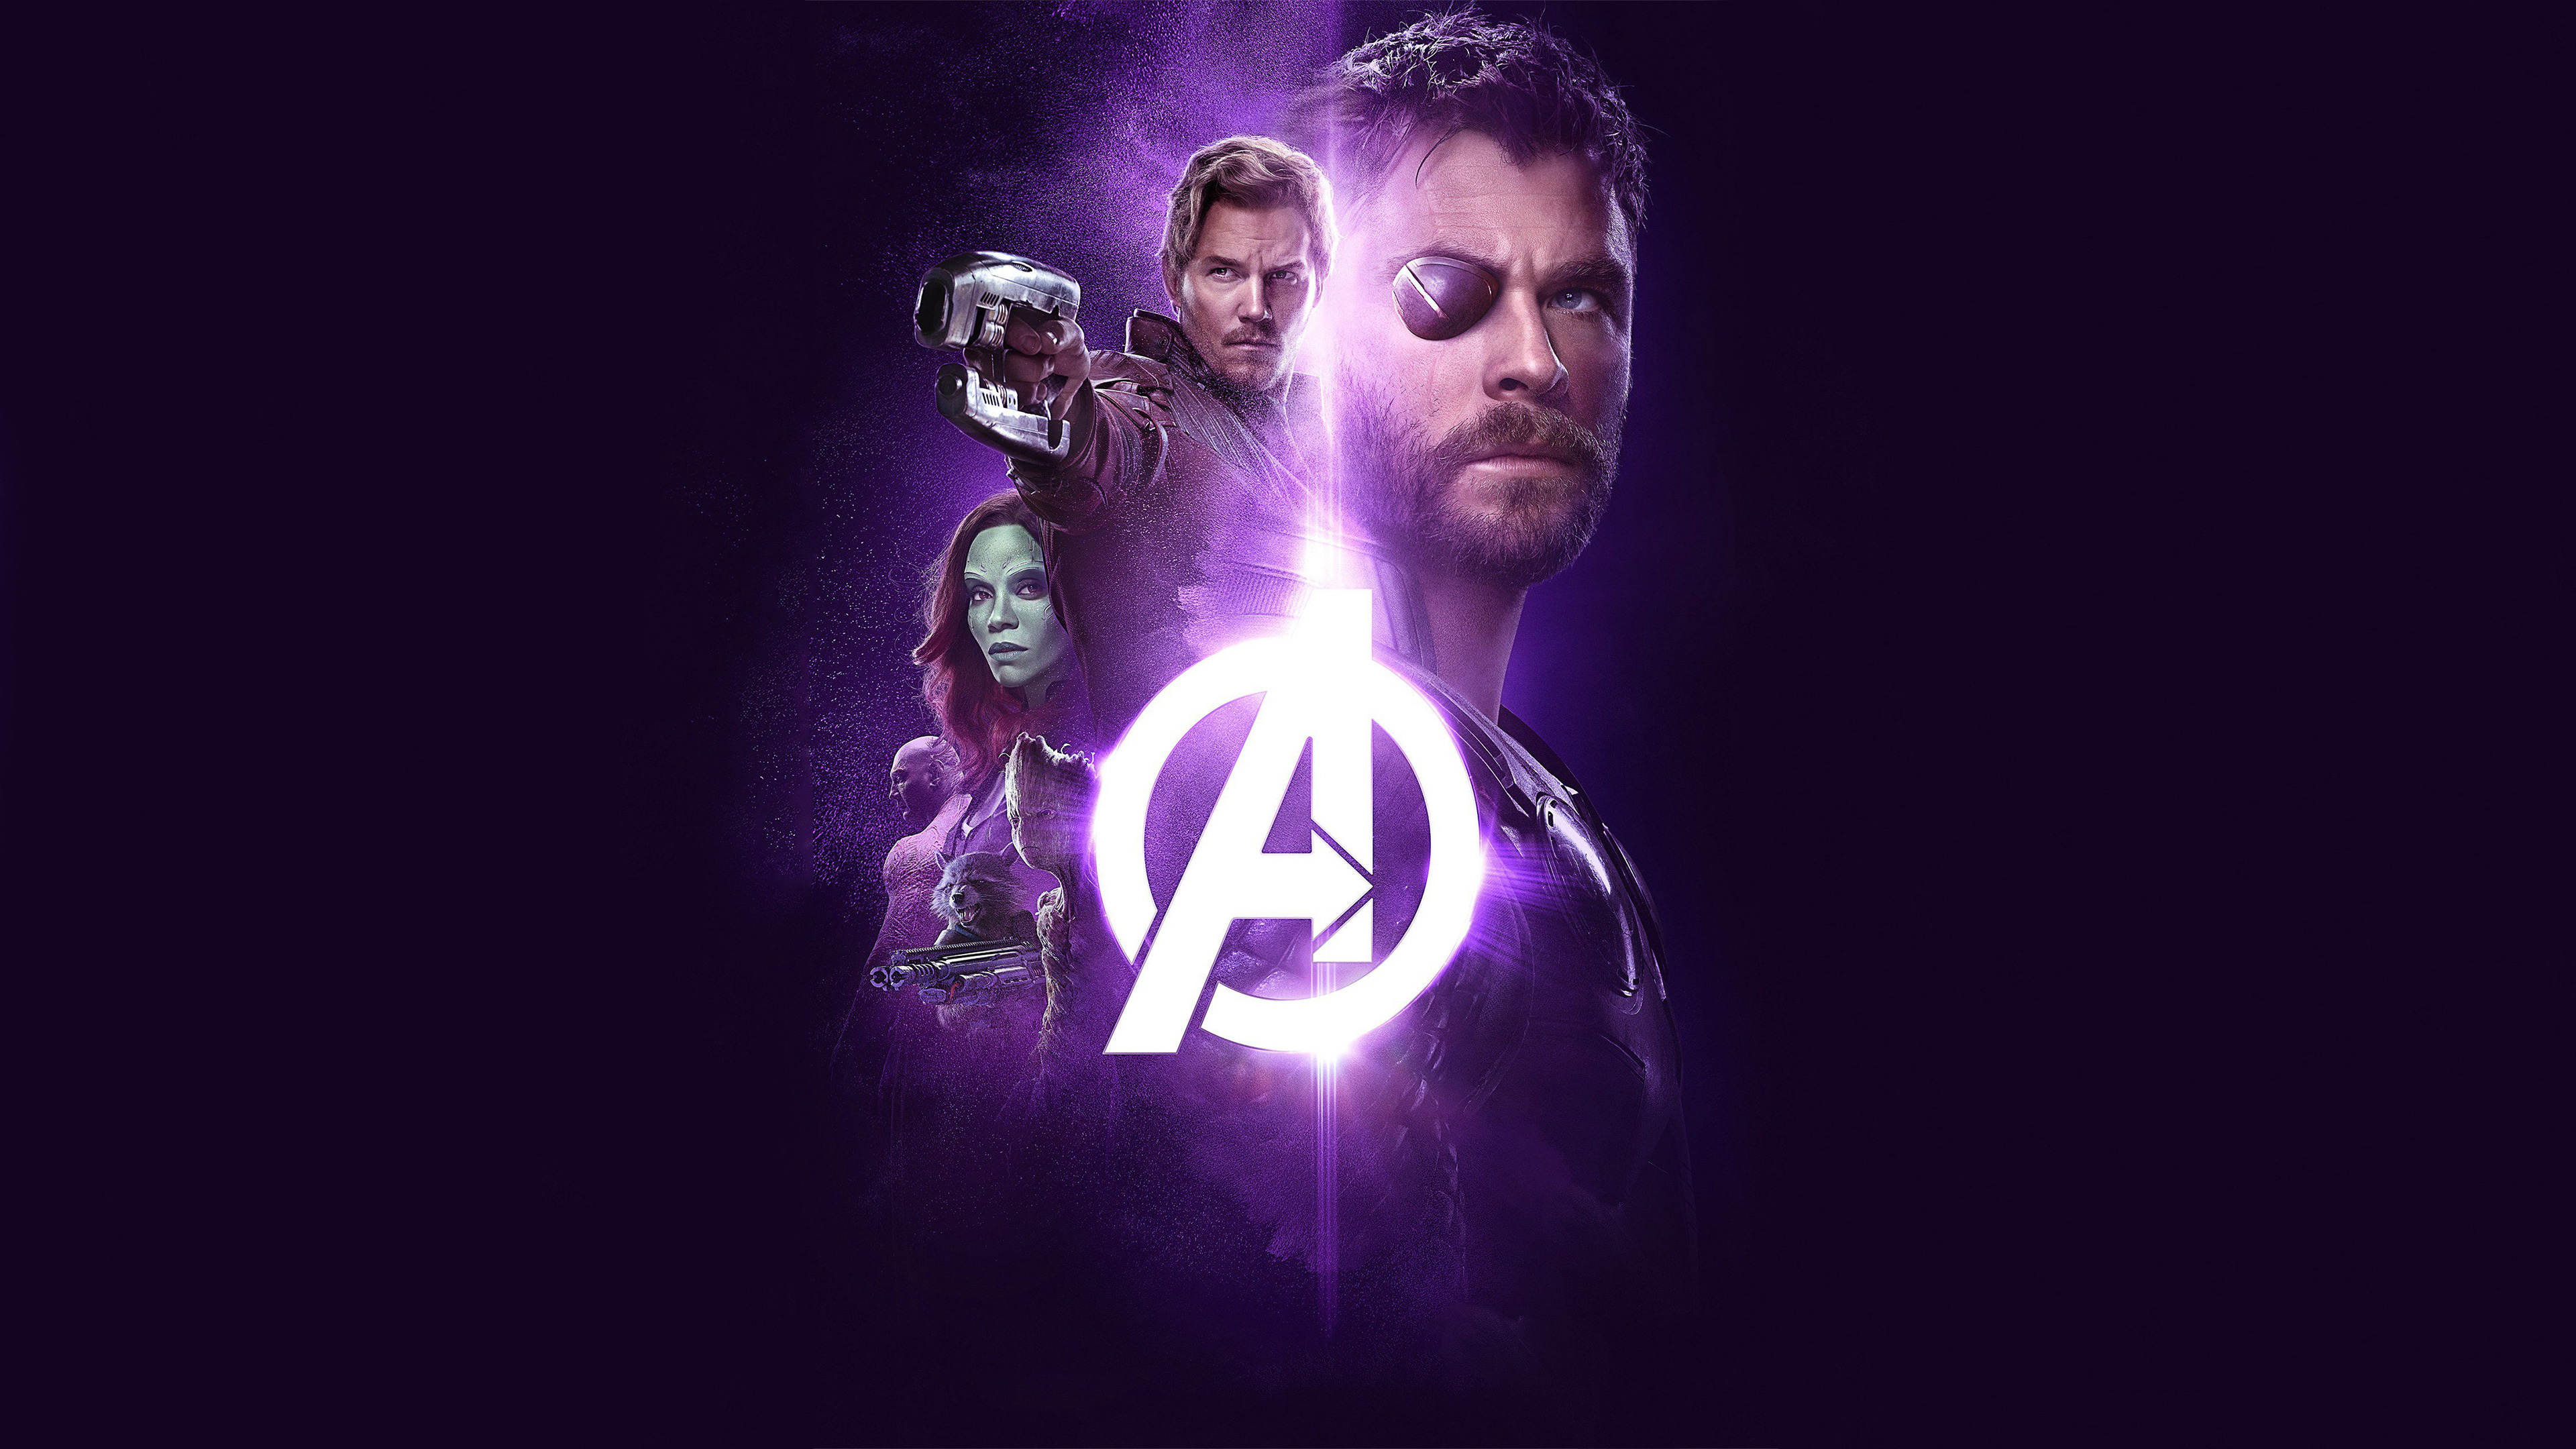 Wallpaper 4k Avengers Infinity War Thor Groot Rocket Star Lord